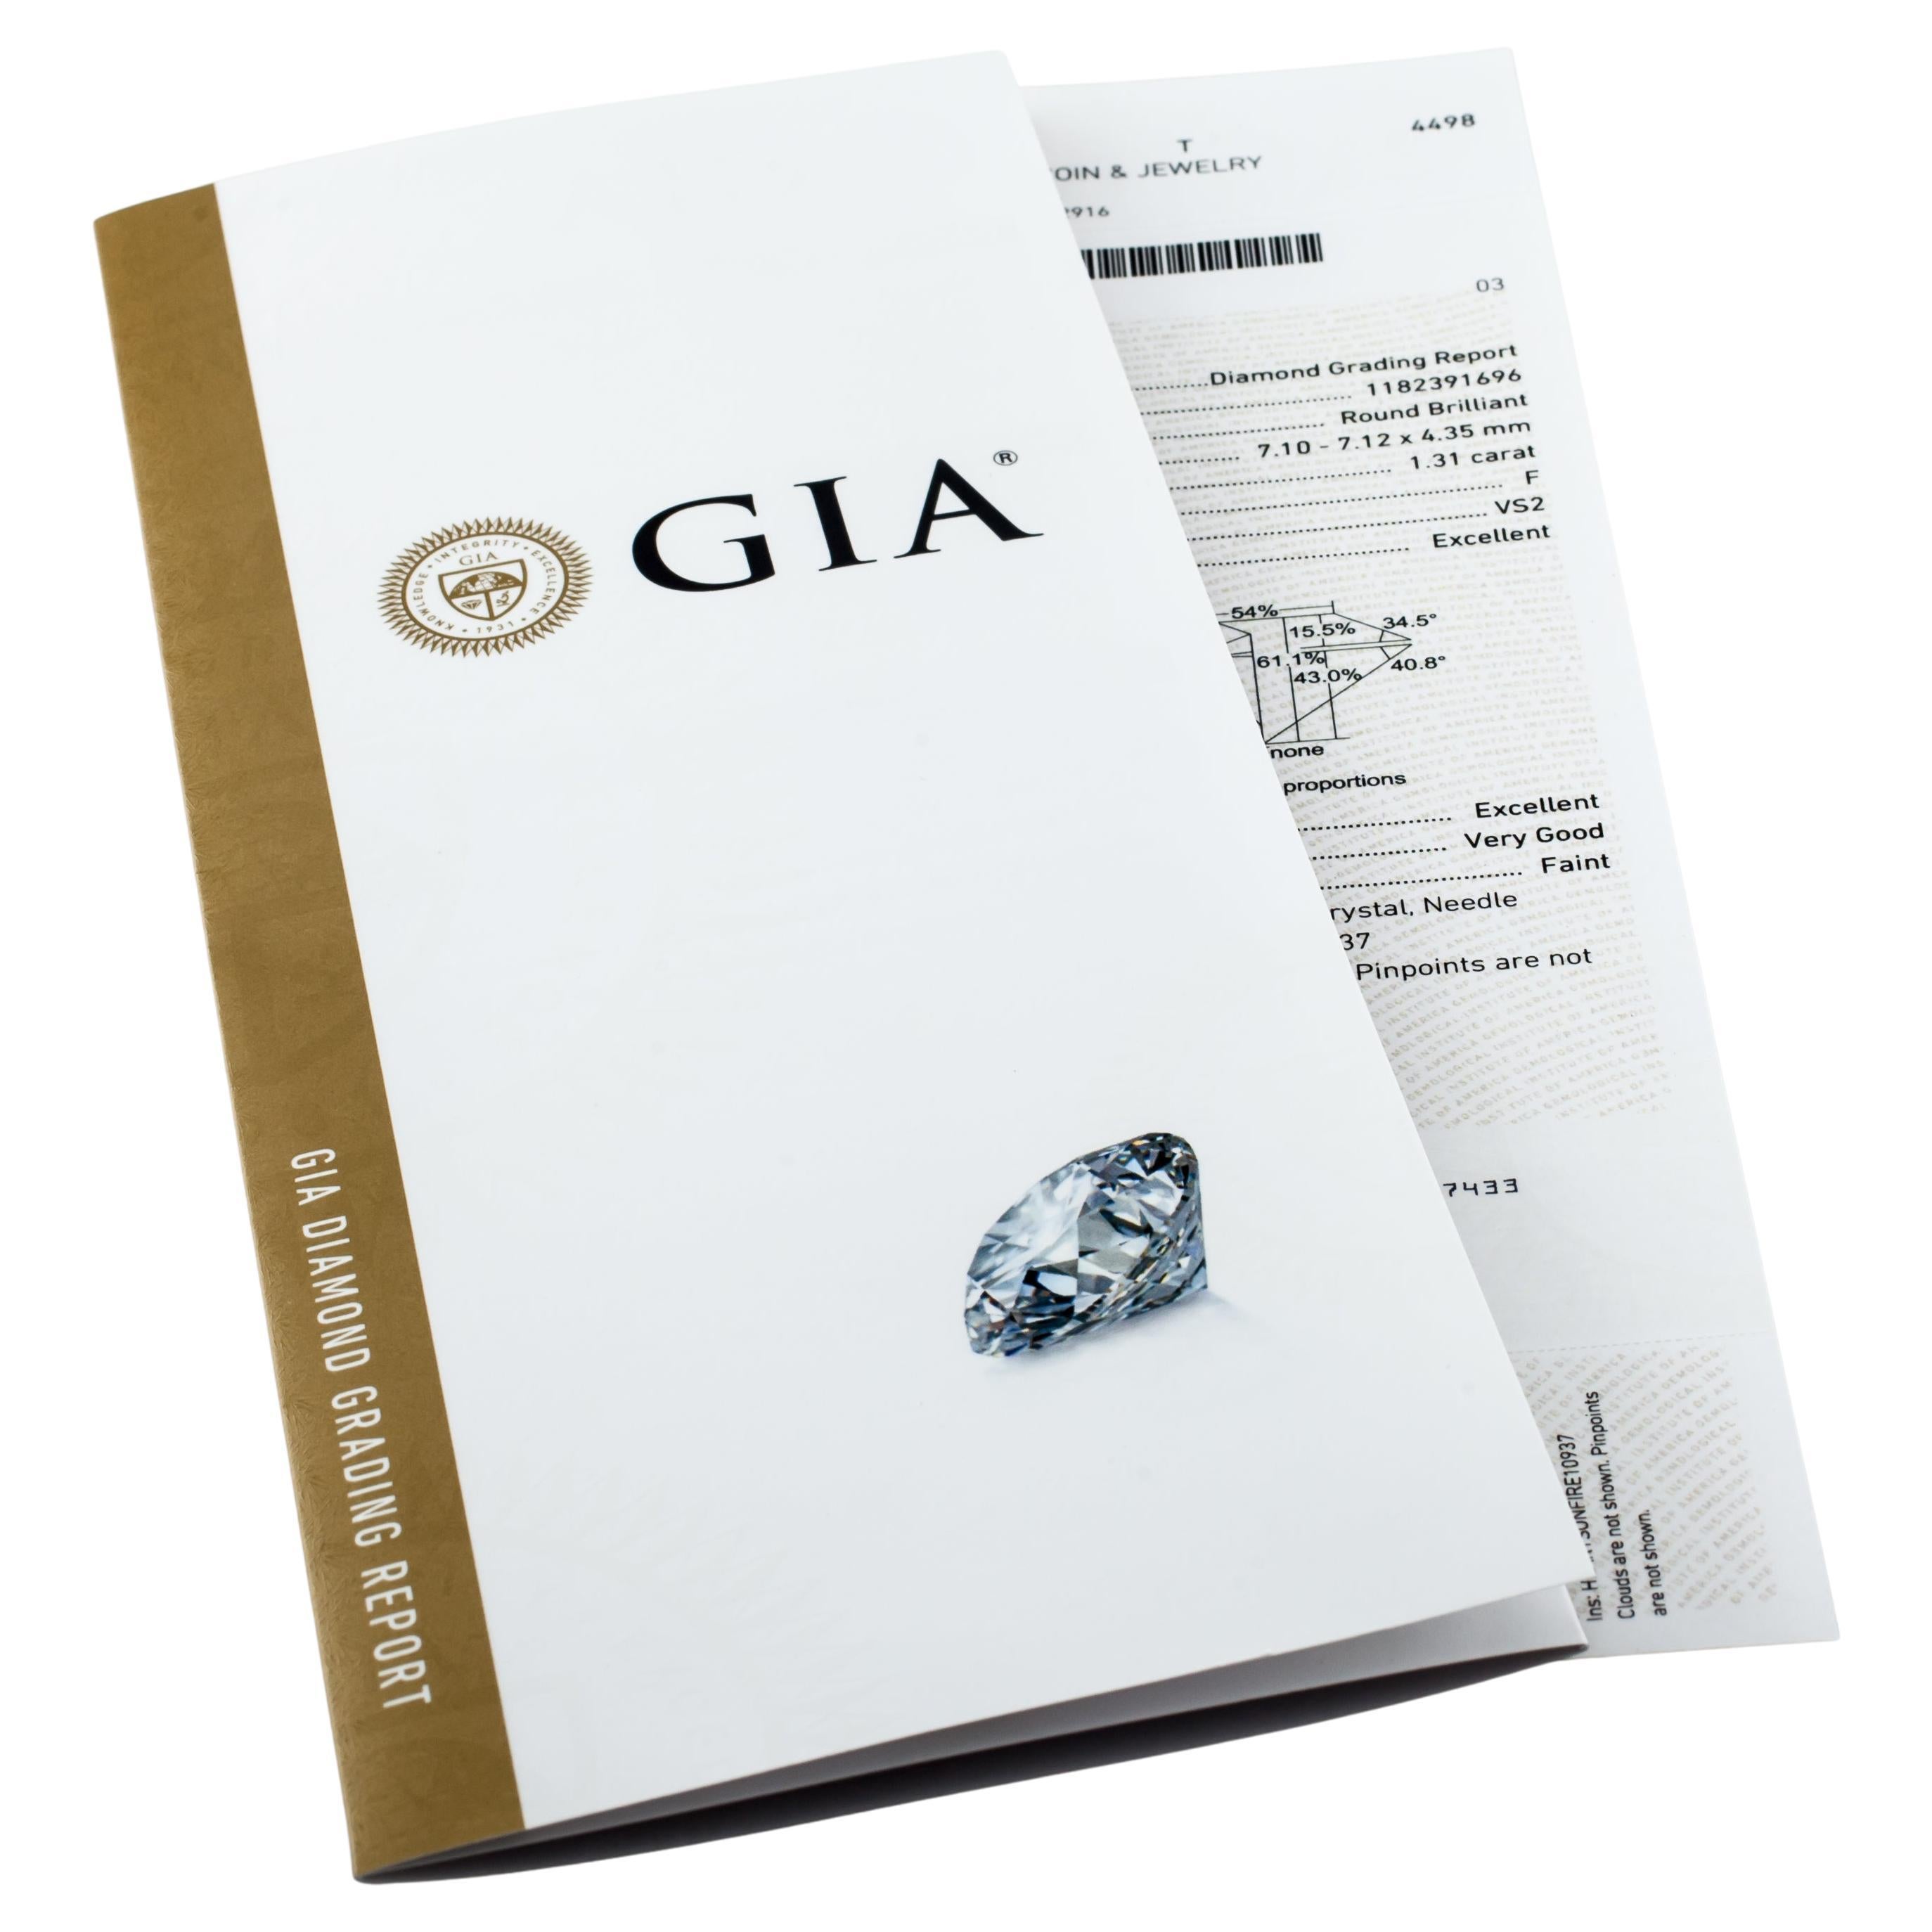 Diamond General Info
GIA Report Number: 1182391696
Diamond Cut: Round Brilliant 
Measurements: 7.12  x  7.10  -  4.35

Diamond Grading Results
Carat Weight: 1.31
Color Grade: F
Clarity Grade: VS2

Additional Grading Information 
Polish: